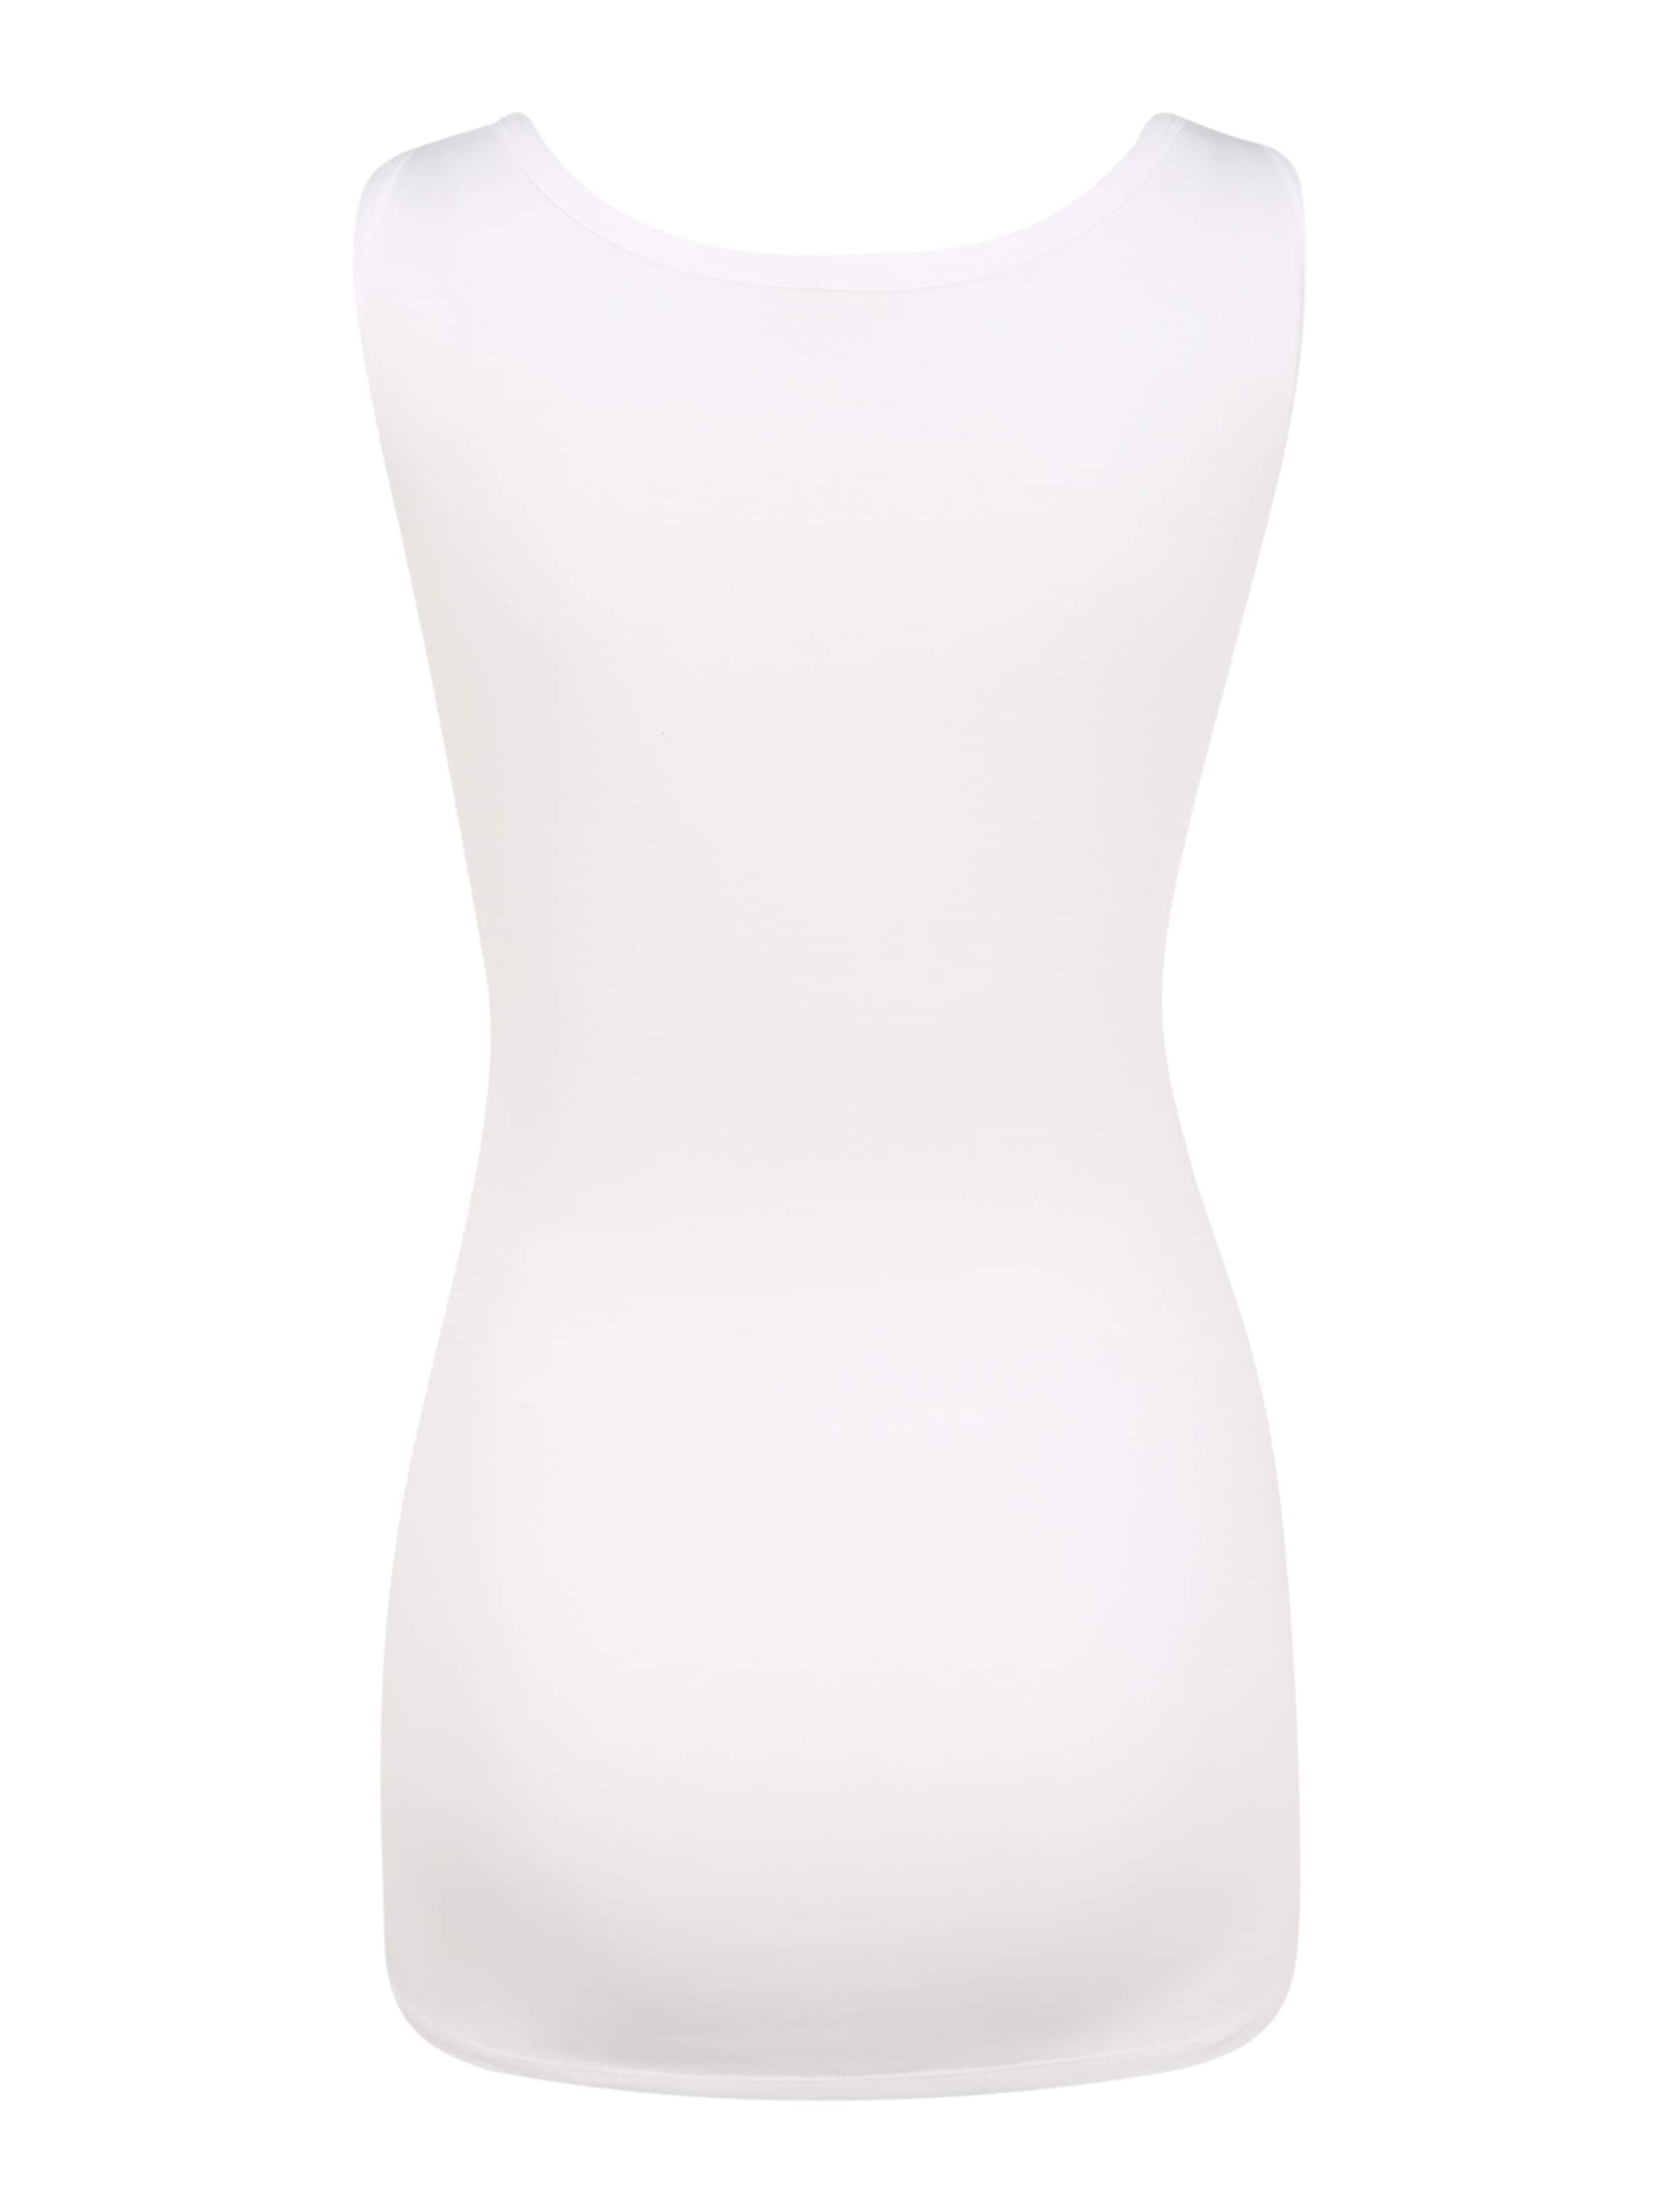 Frauen Shirts & Tops BOOB Top in Weiß - XG99719